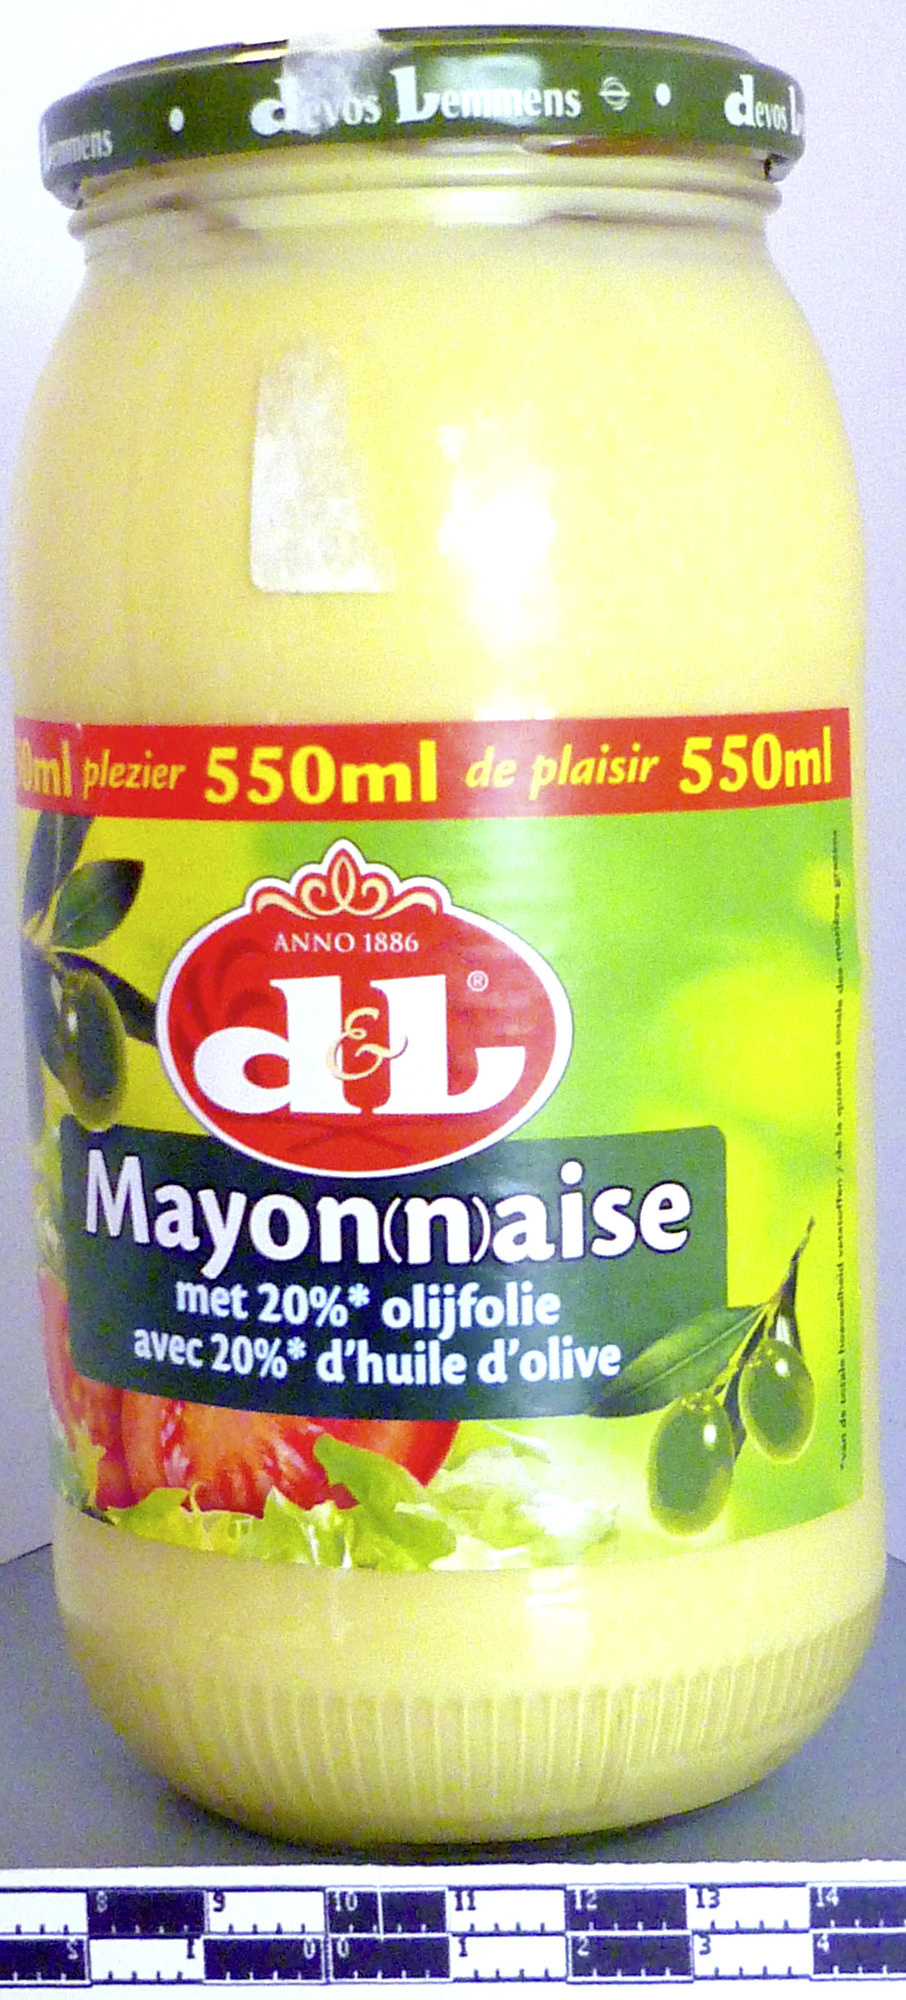 Mayon(n)aise avec 20% d'huile d'olive - Product - fr